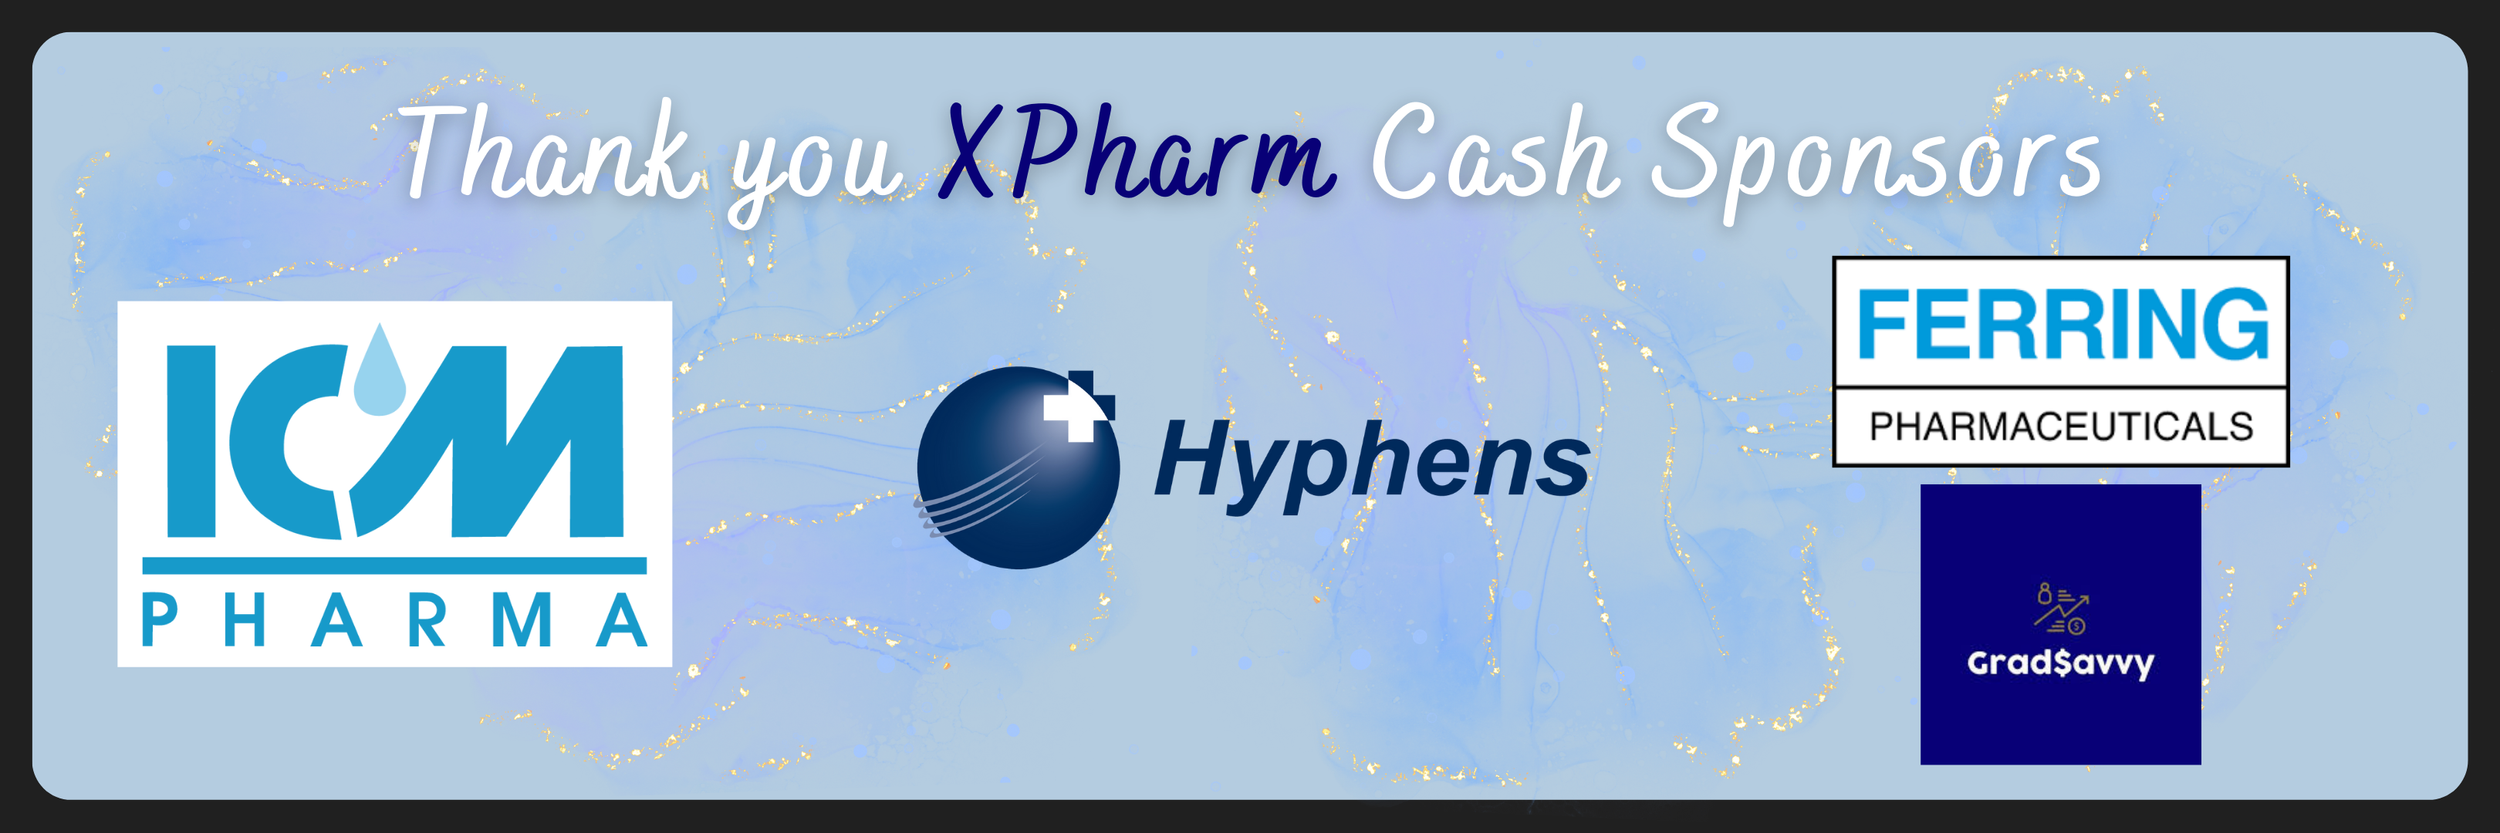 XPharm Cash Sponsors.png